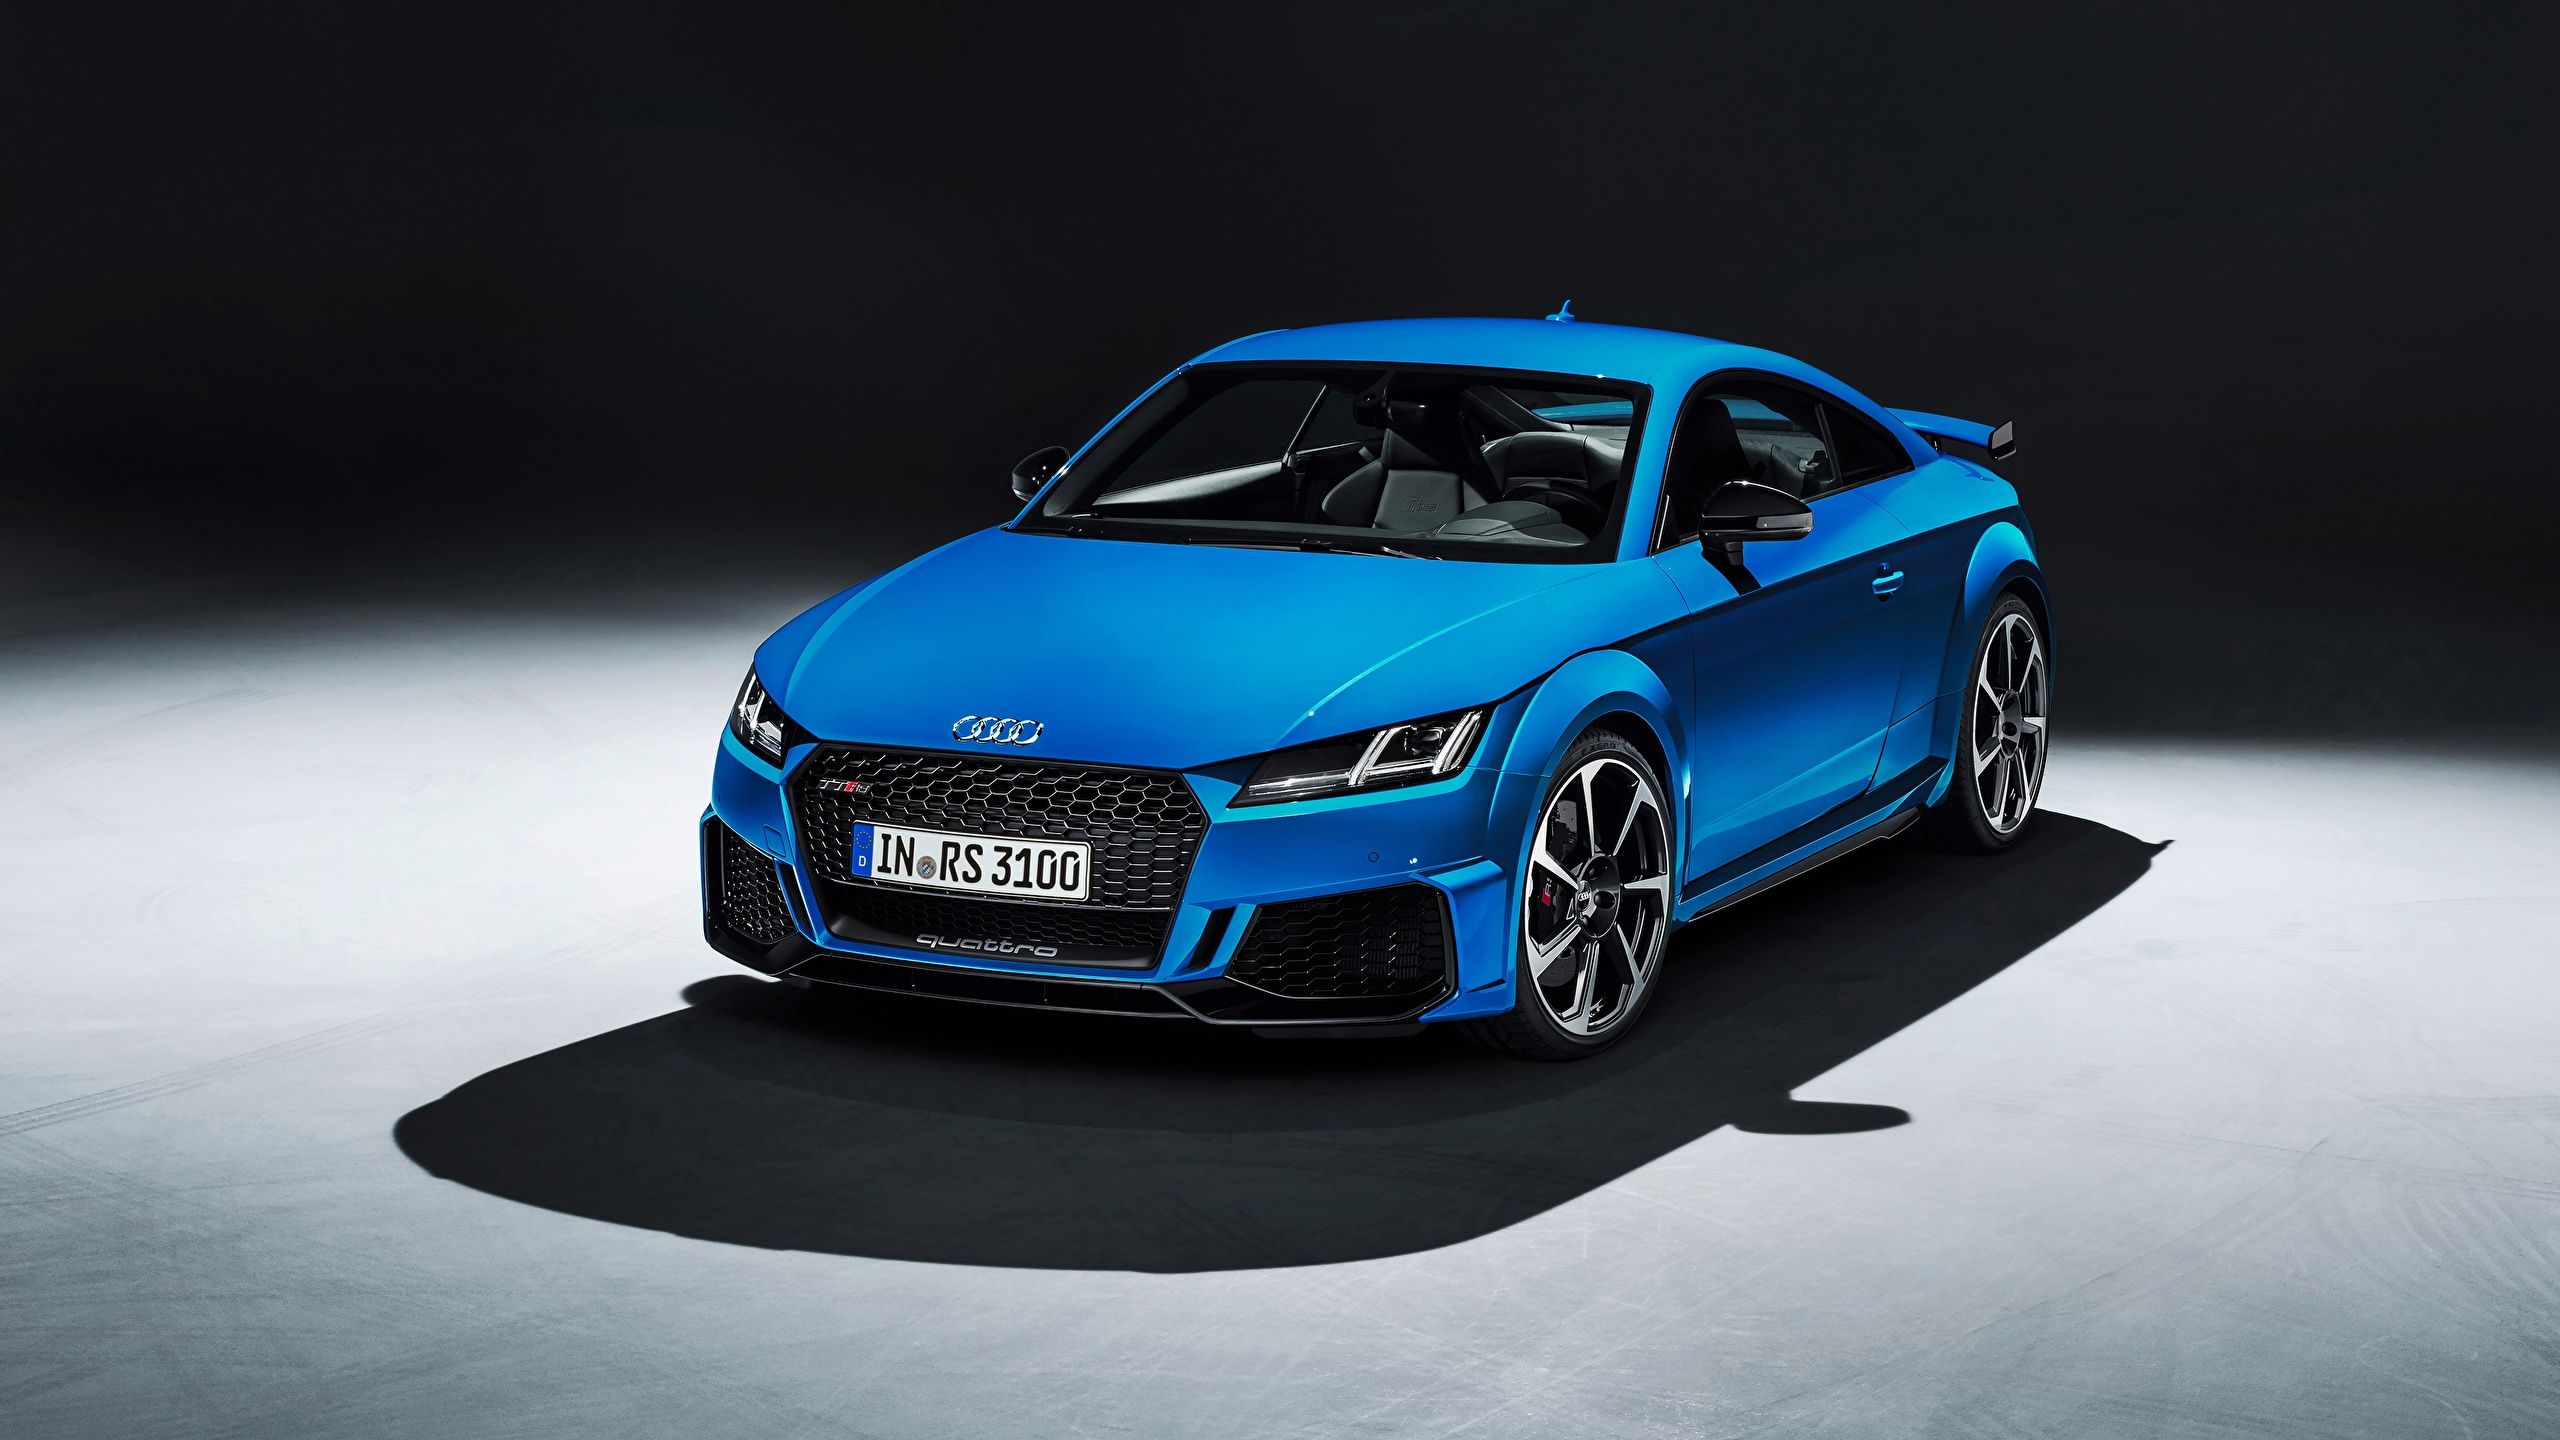  Audi TT Hintergrundbild 2560x1440. Foto Audi TT RS, 2020 Coupe Blau automobil Metallisch 2560x1440